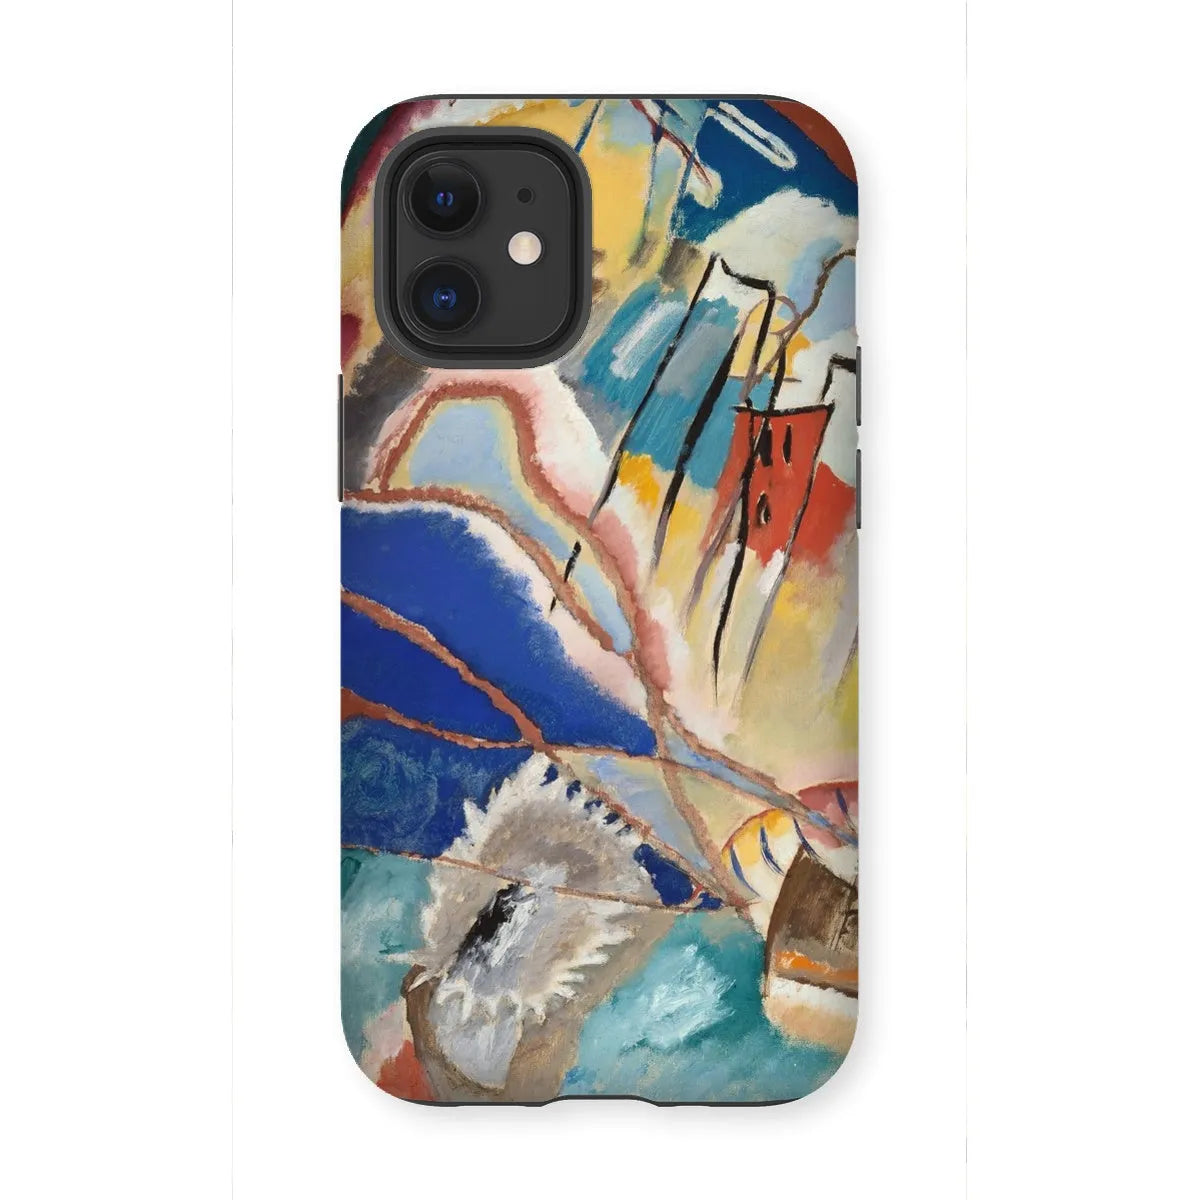 Improvisation No. 30 Art Phone Case - Wassily Kandinsky - Iphone 12 Mini / Matte - Mobile Phone Cases - Aesthetic Art